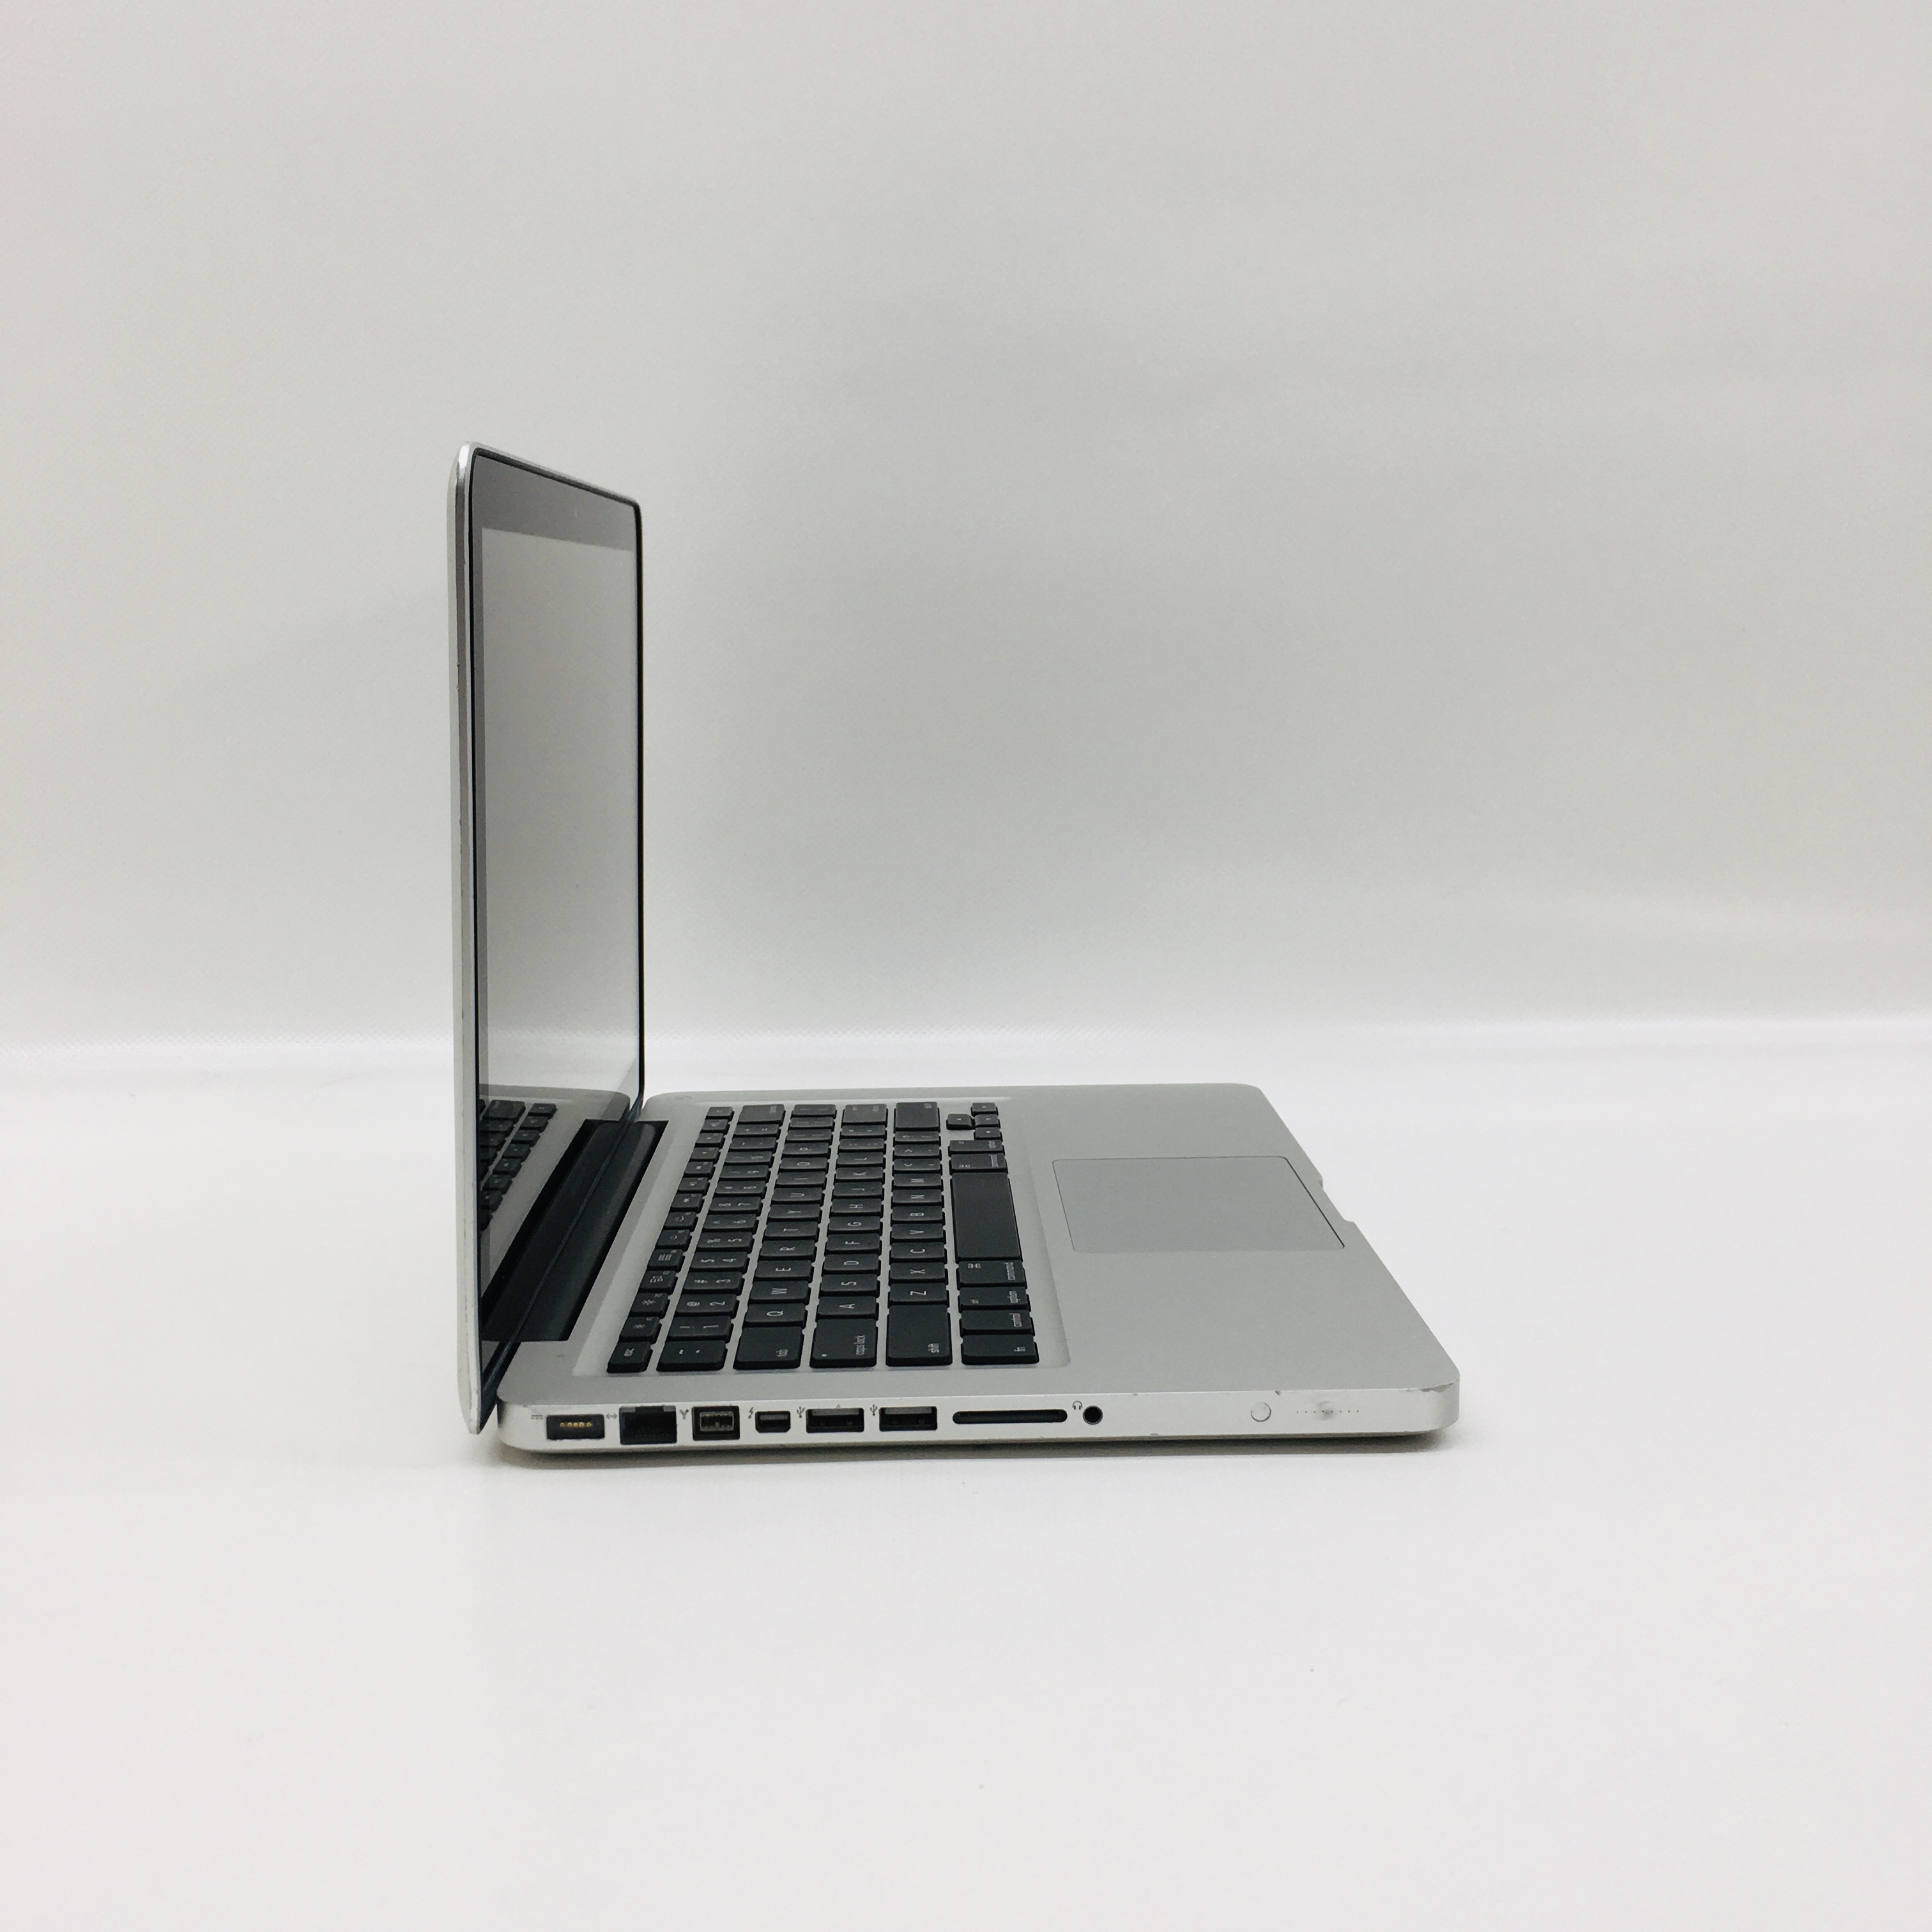 MacBook Pro 13" Late 2011 (Intel Core i5 2.4 GHz 4 GB RAM 500 GB HDD), Intel Core i5 2.4 GHz, 4 GB RAM, 500 GB HDD, image 2